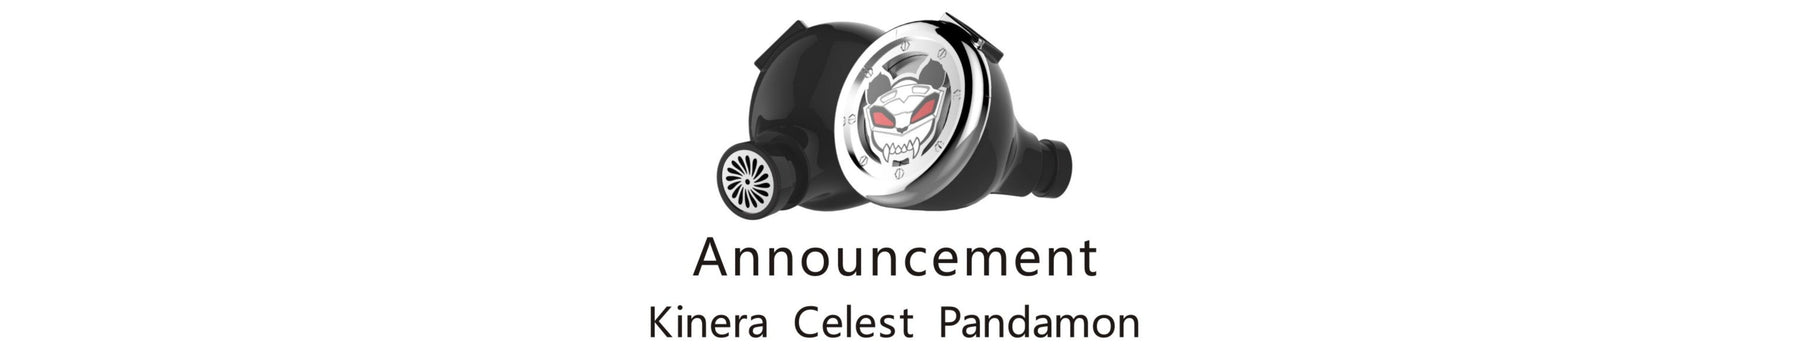 Celest Pandamon: Brand New IEMs with 10mm SPD 2.0 Planar Driver Unit